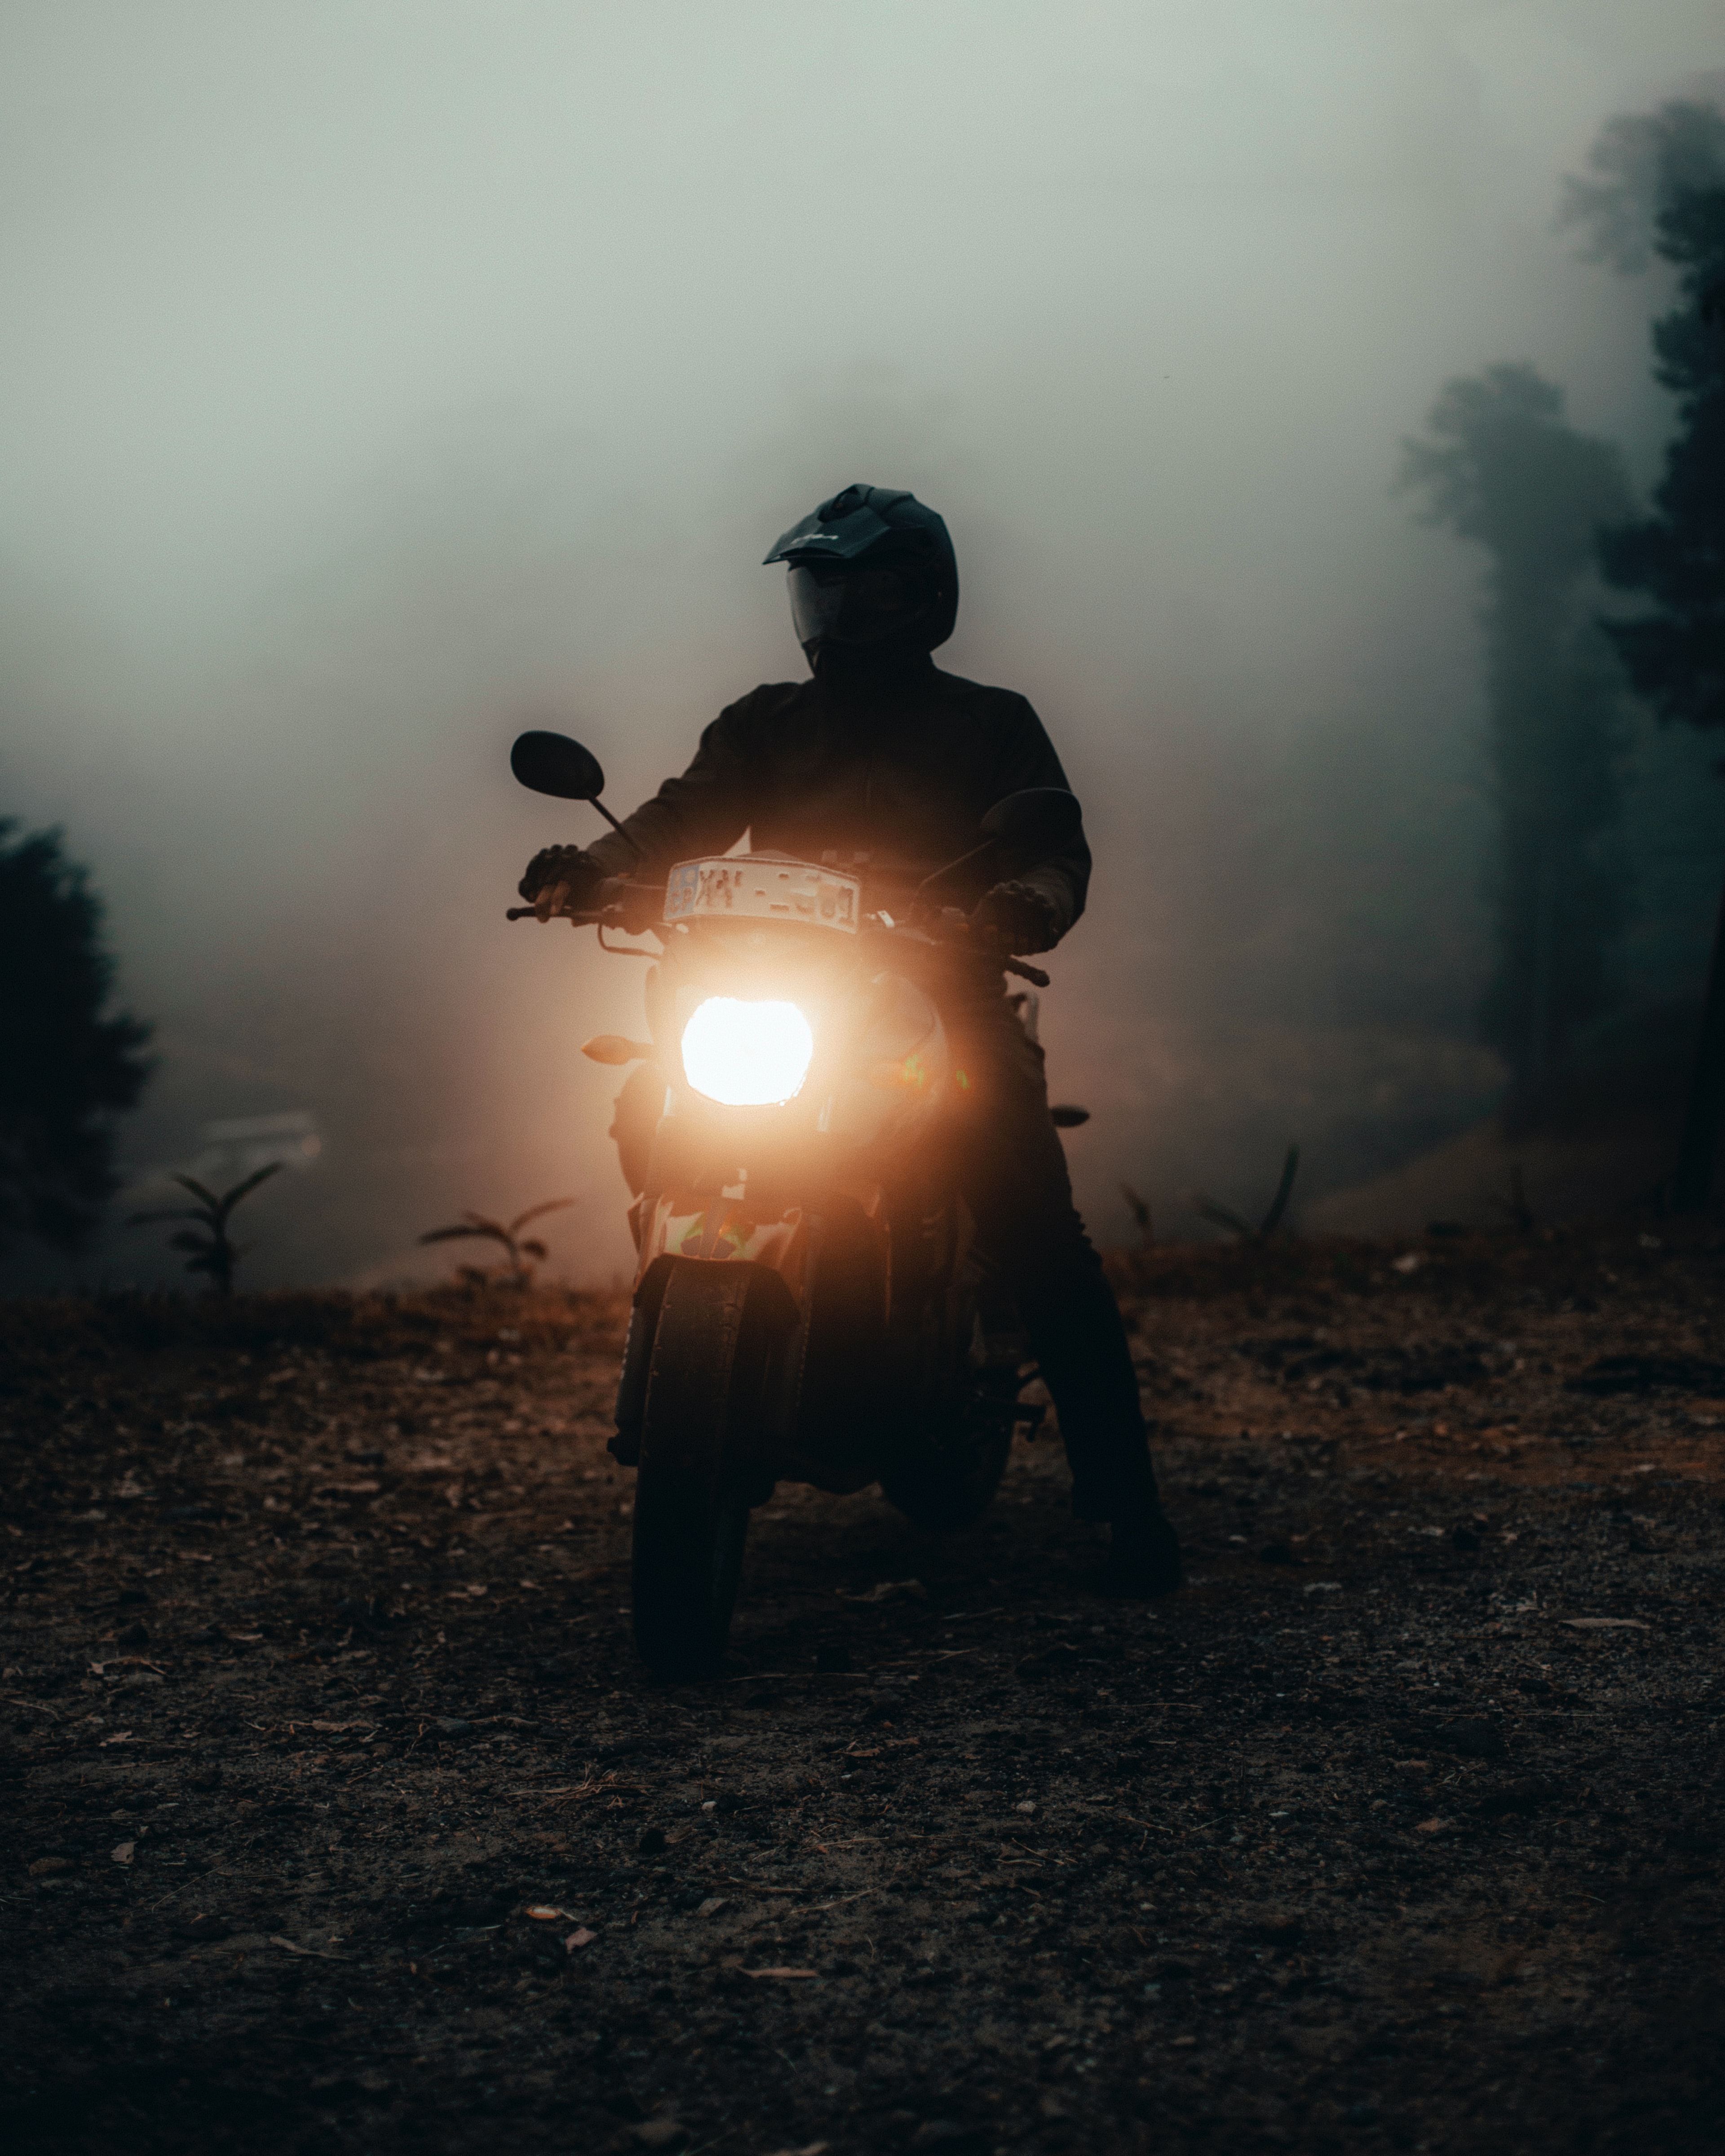 motorcycles, shine, light, fog, motorcyclist, motorcycle, headlight